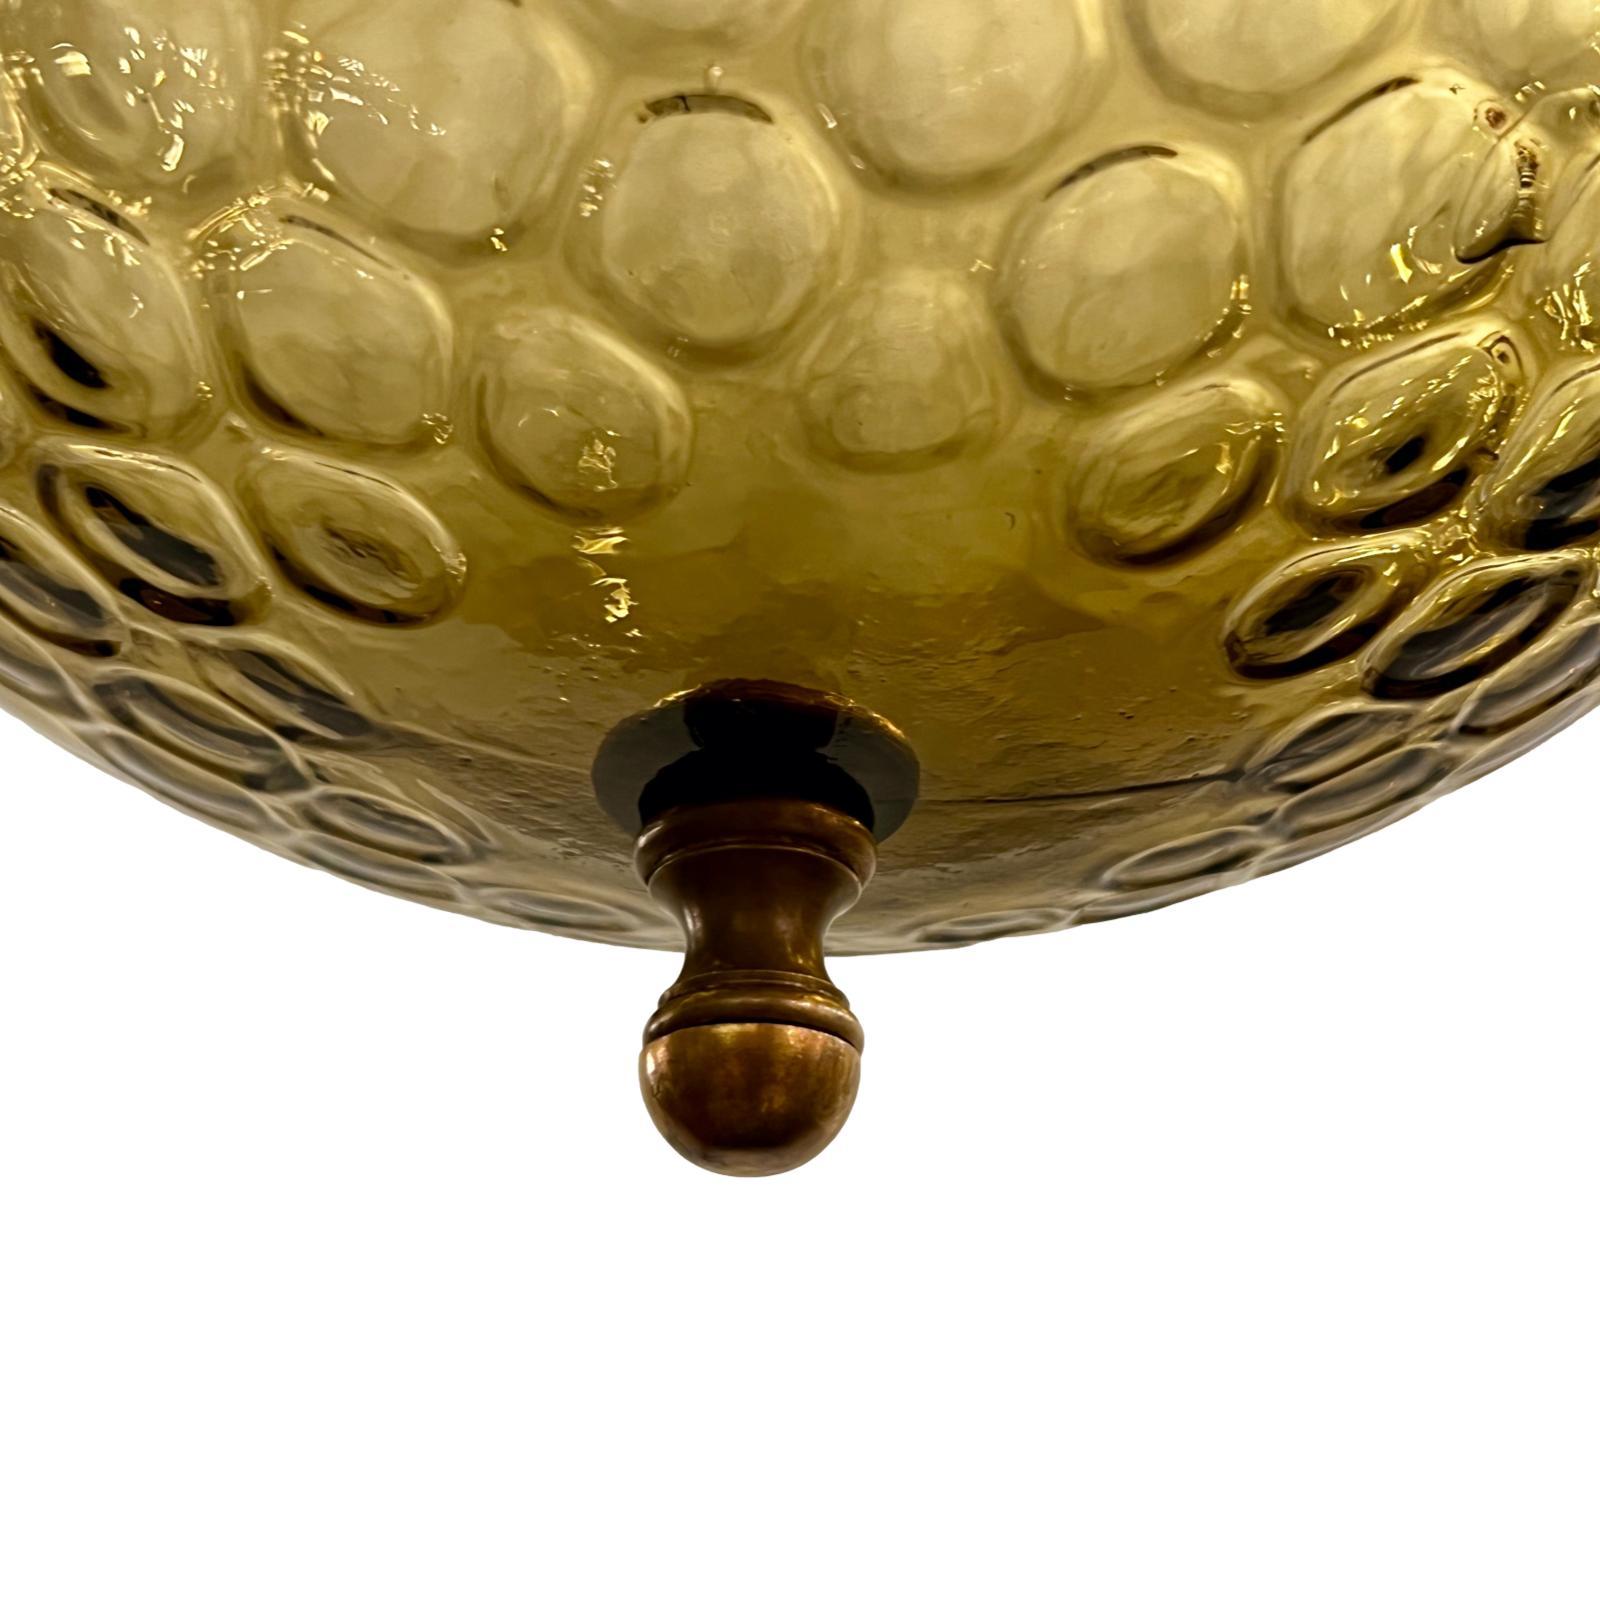 A circa 1960's Italian blown glass lantern with interior light.

Measurements:
Drop: 19